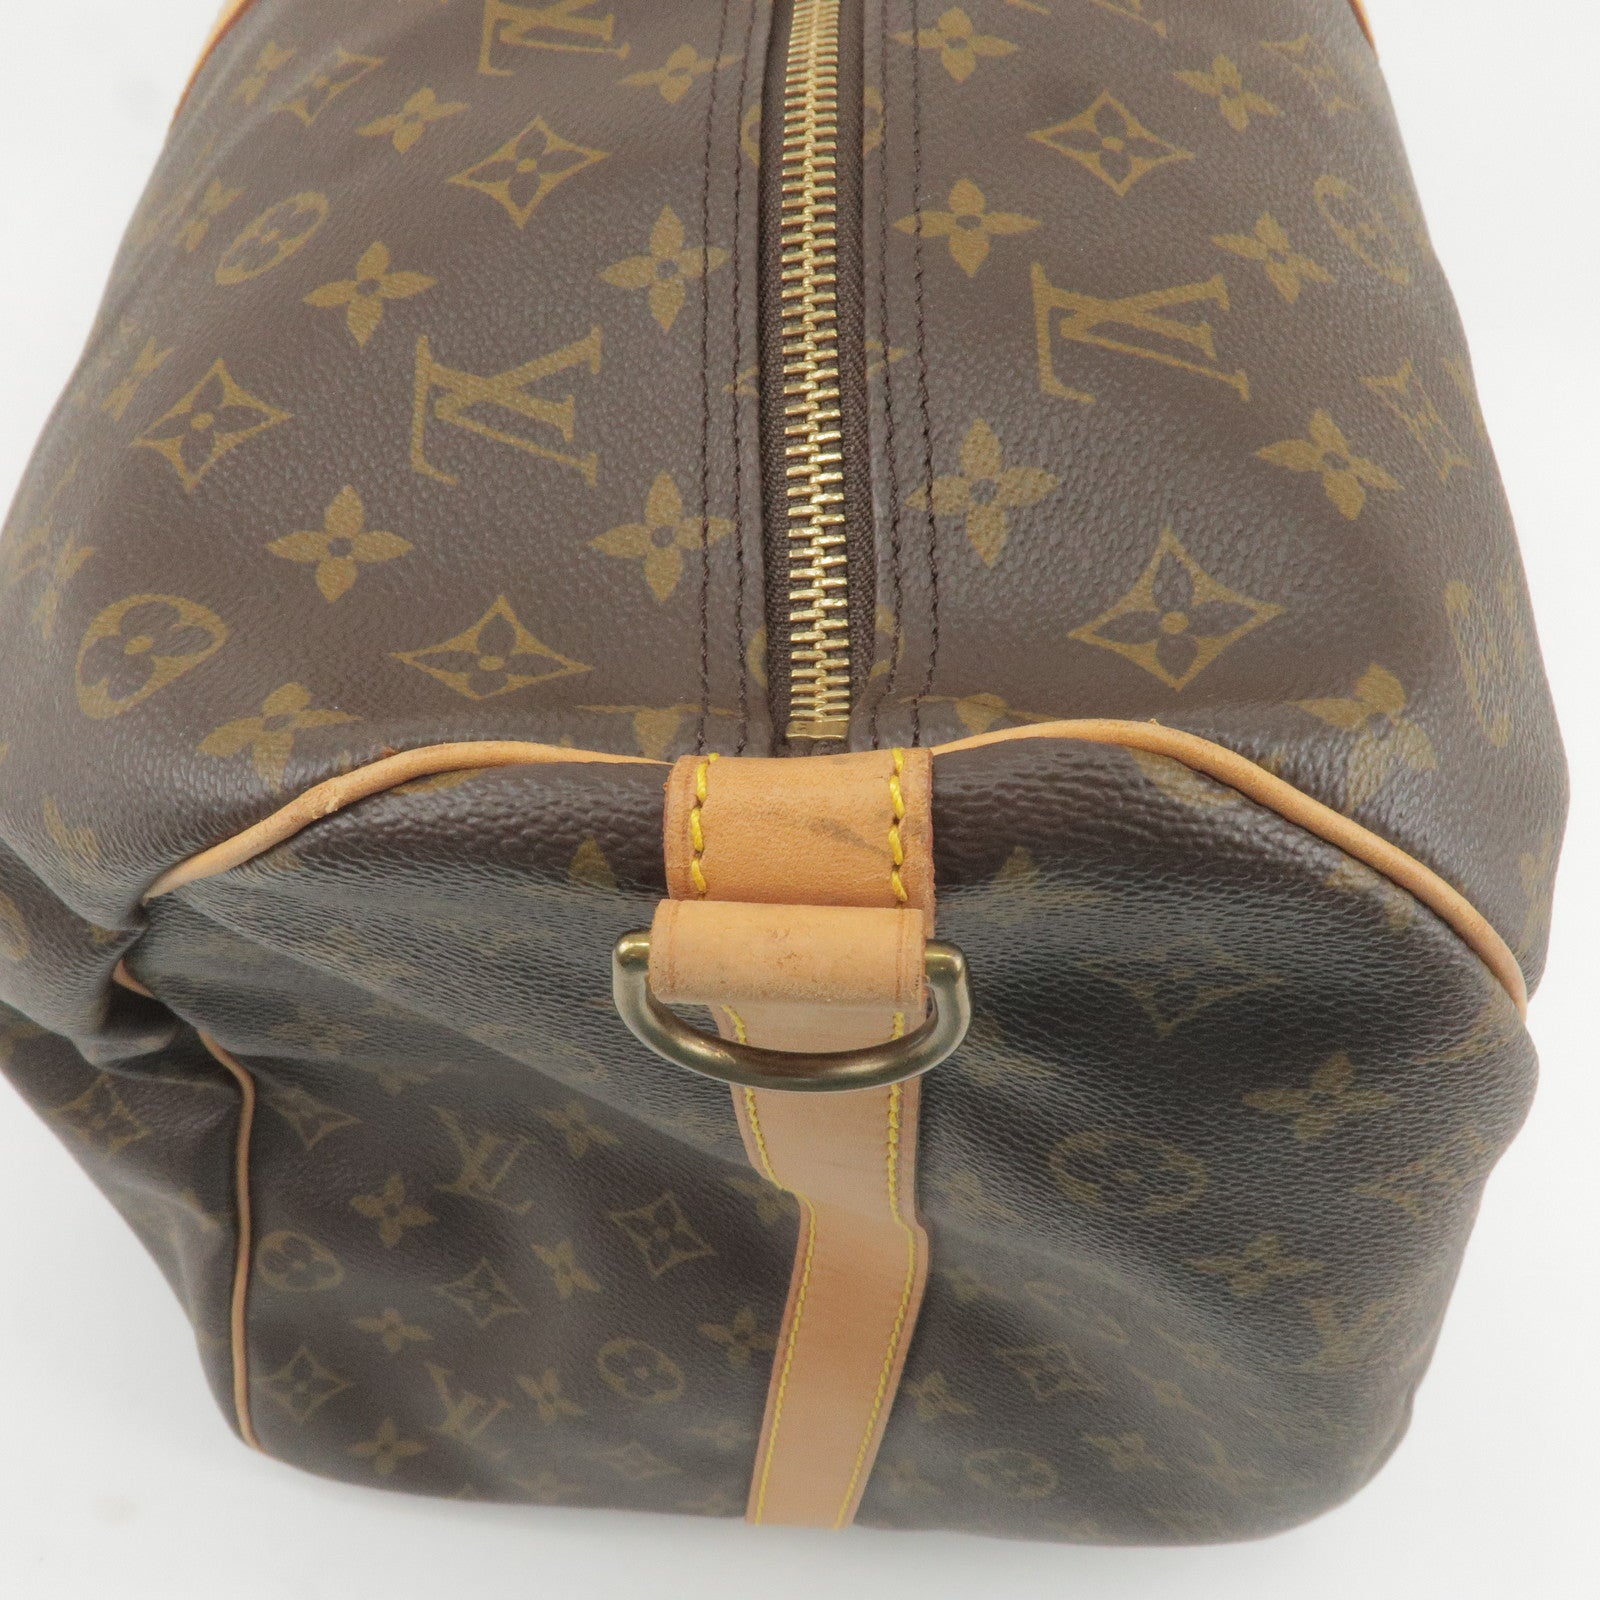 Louis Vuitton Epi Pastel Bag and Wallet Colors for Spring 2014